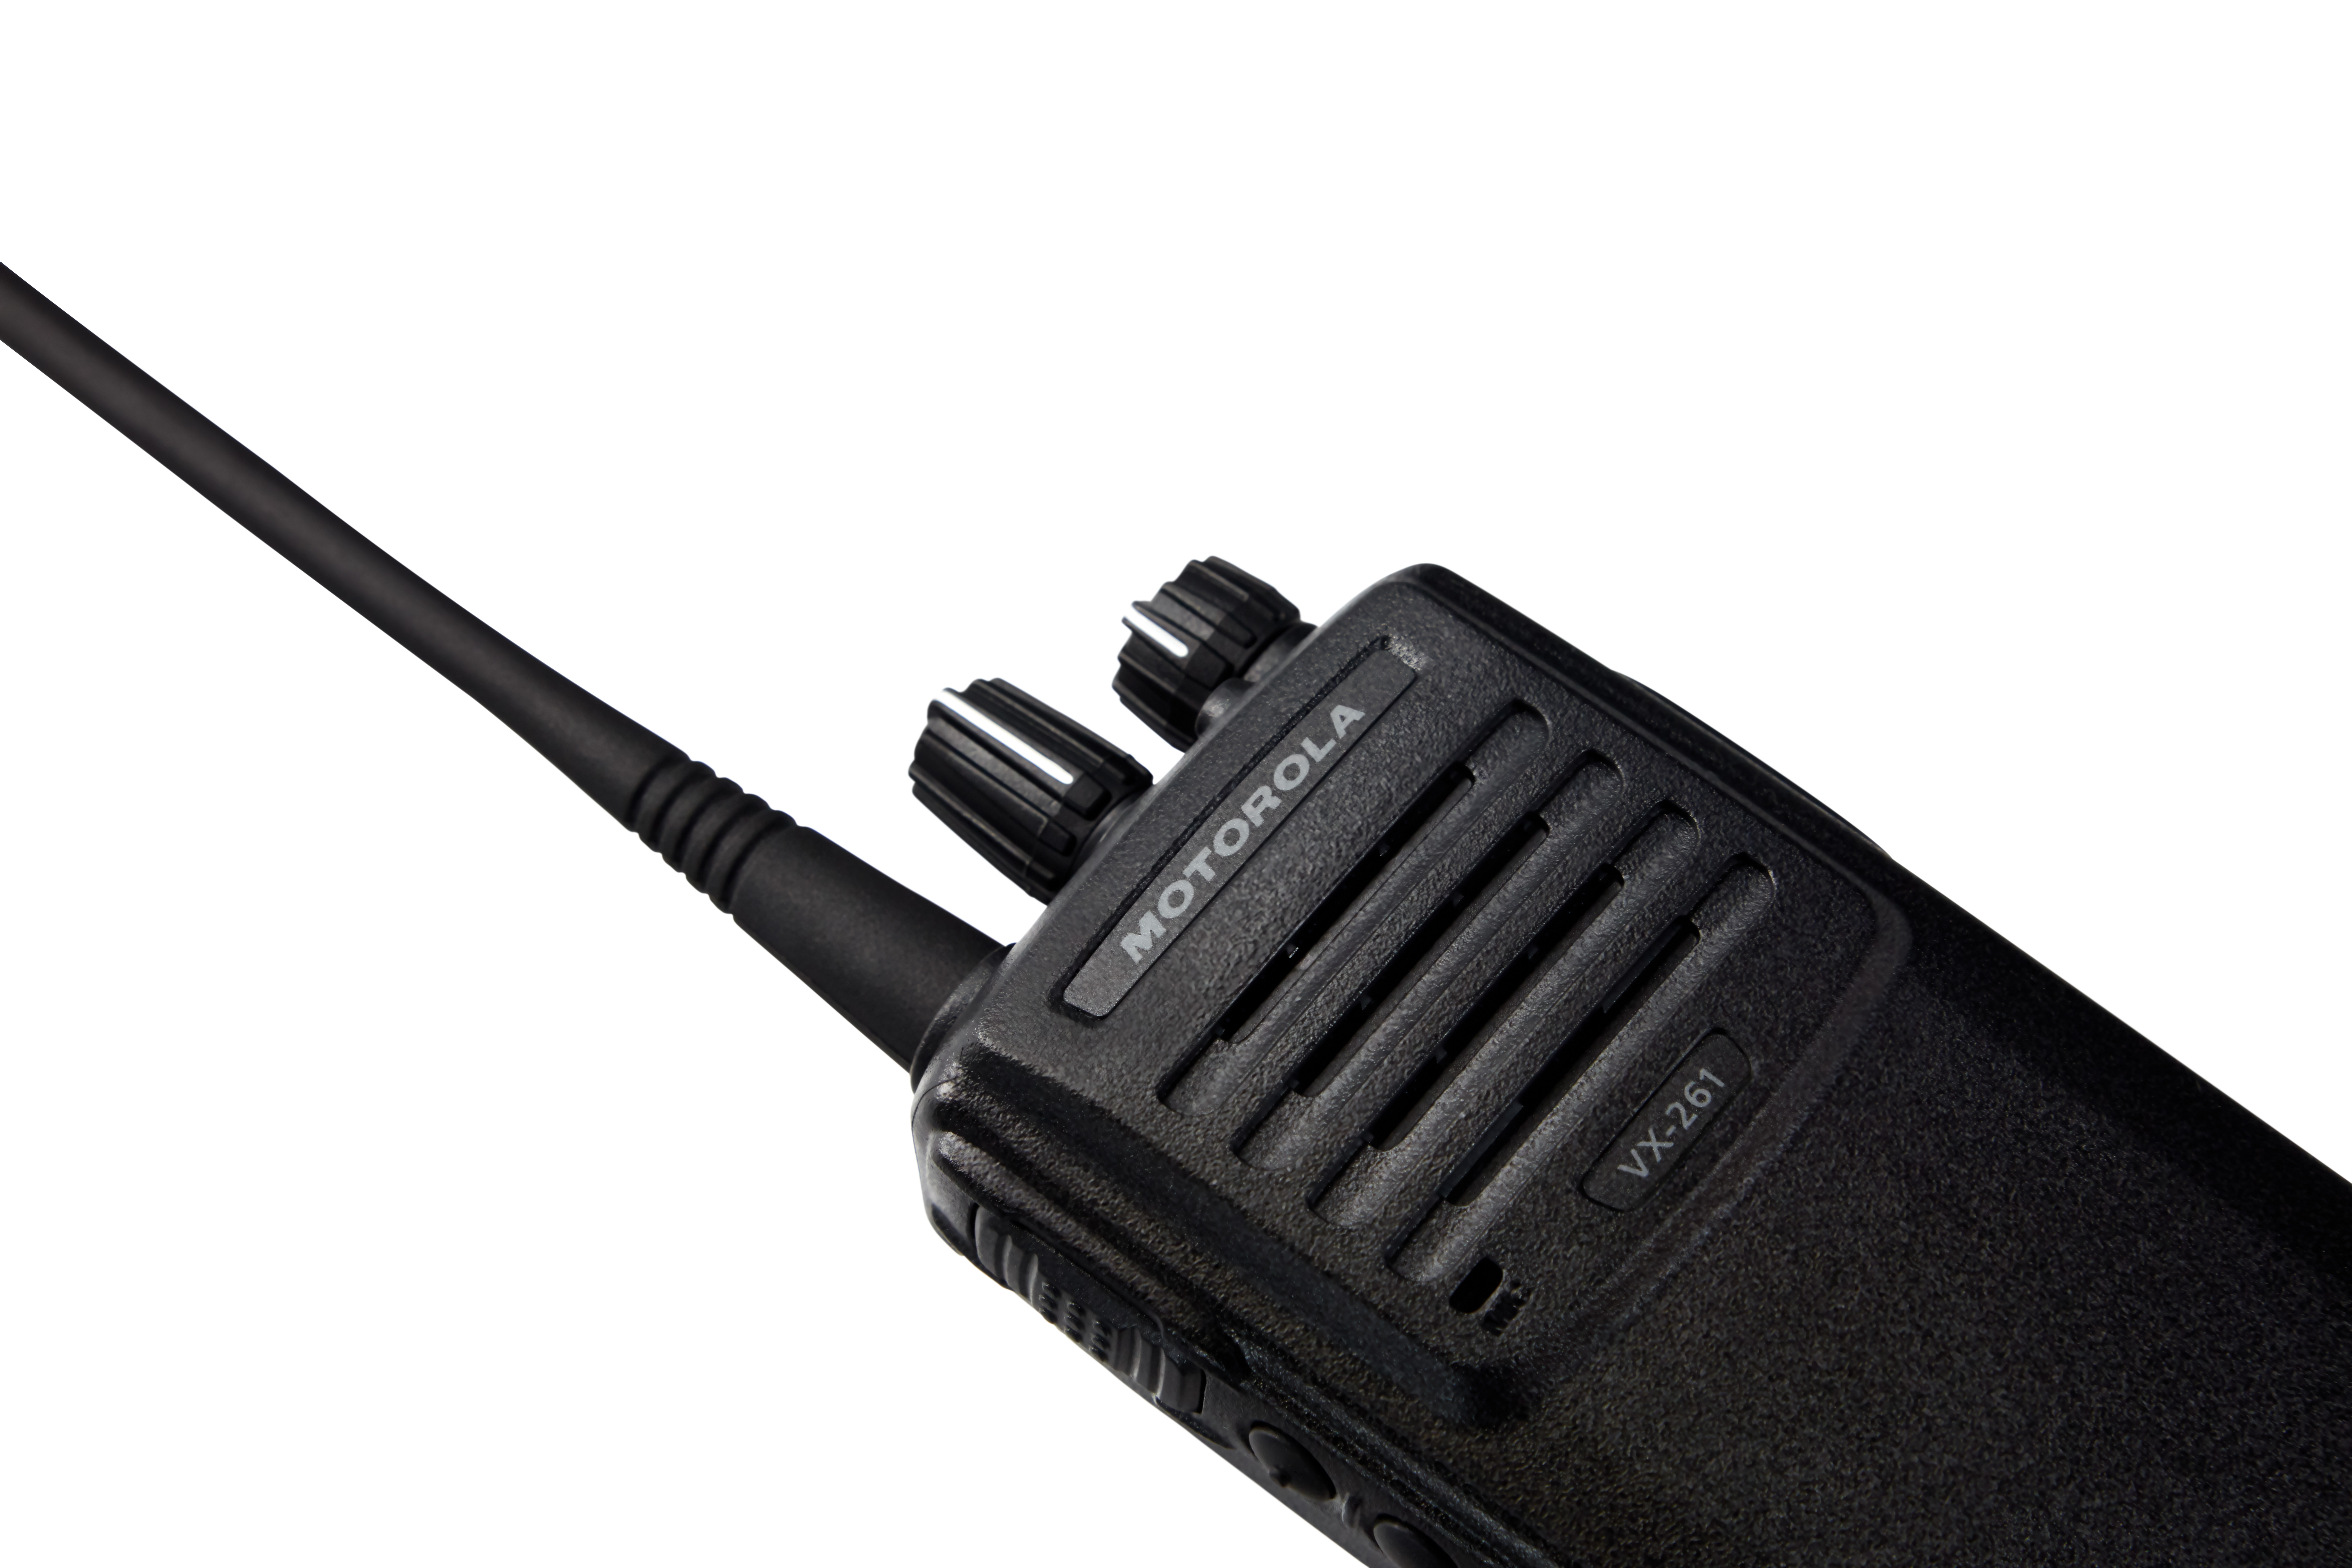 Vx 261 Radios Portatiles Analogicos Descontinuado Motorola Solutions